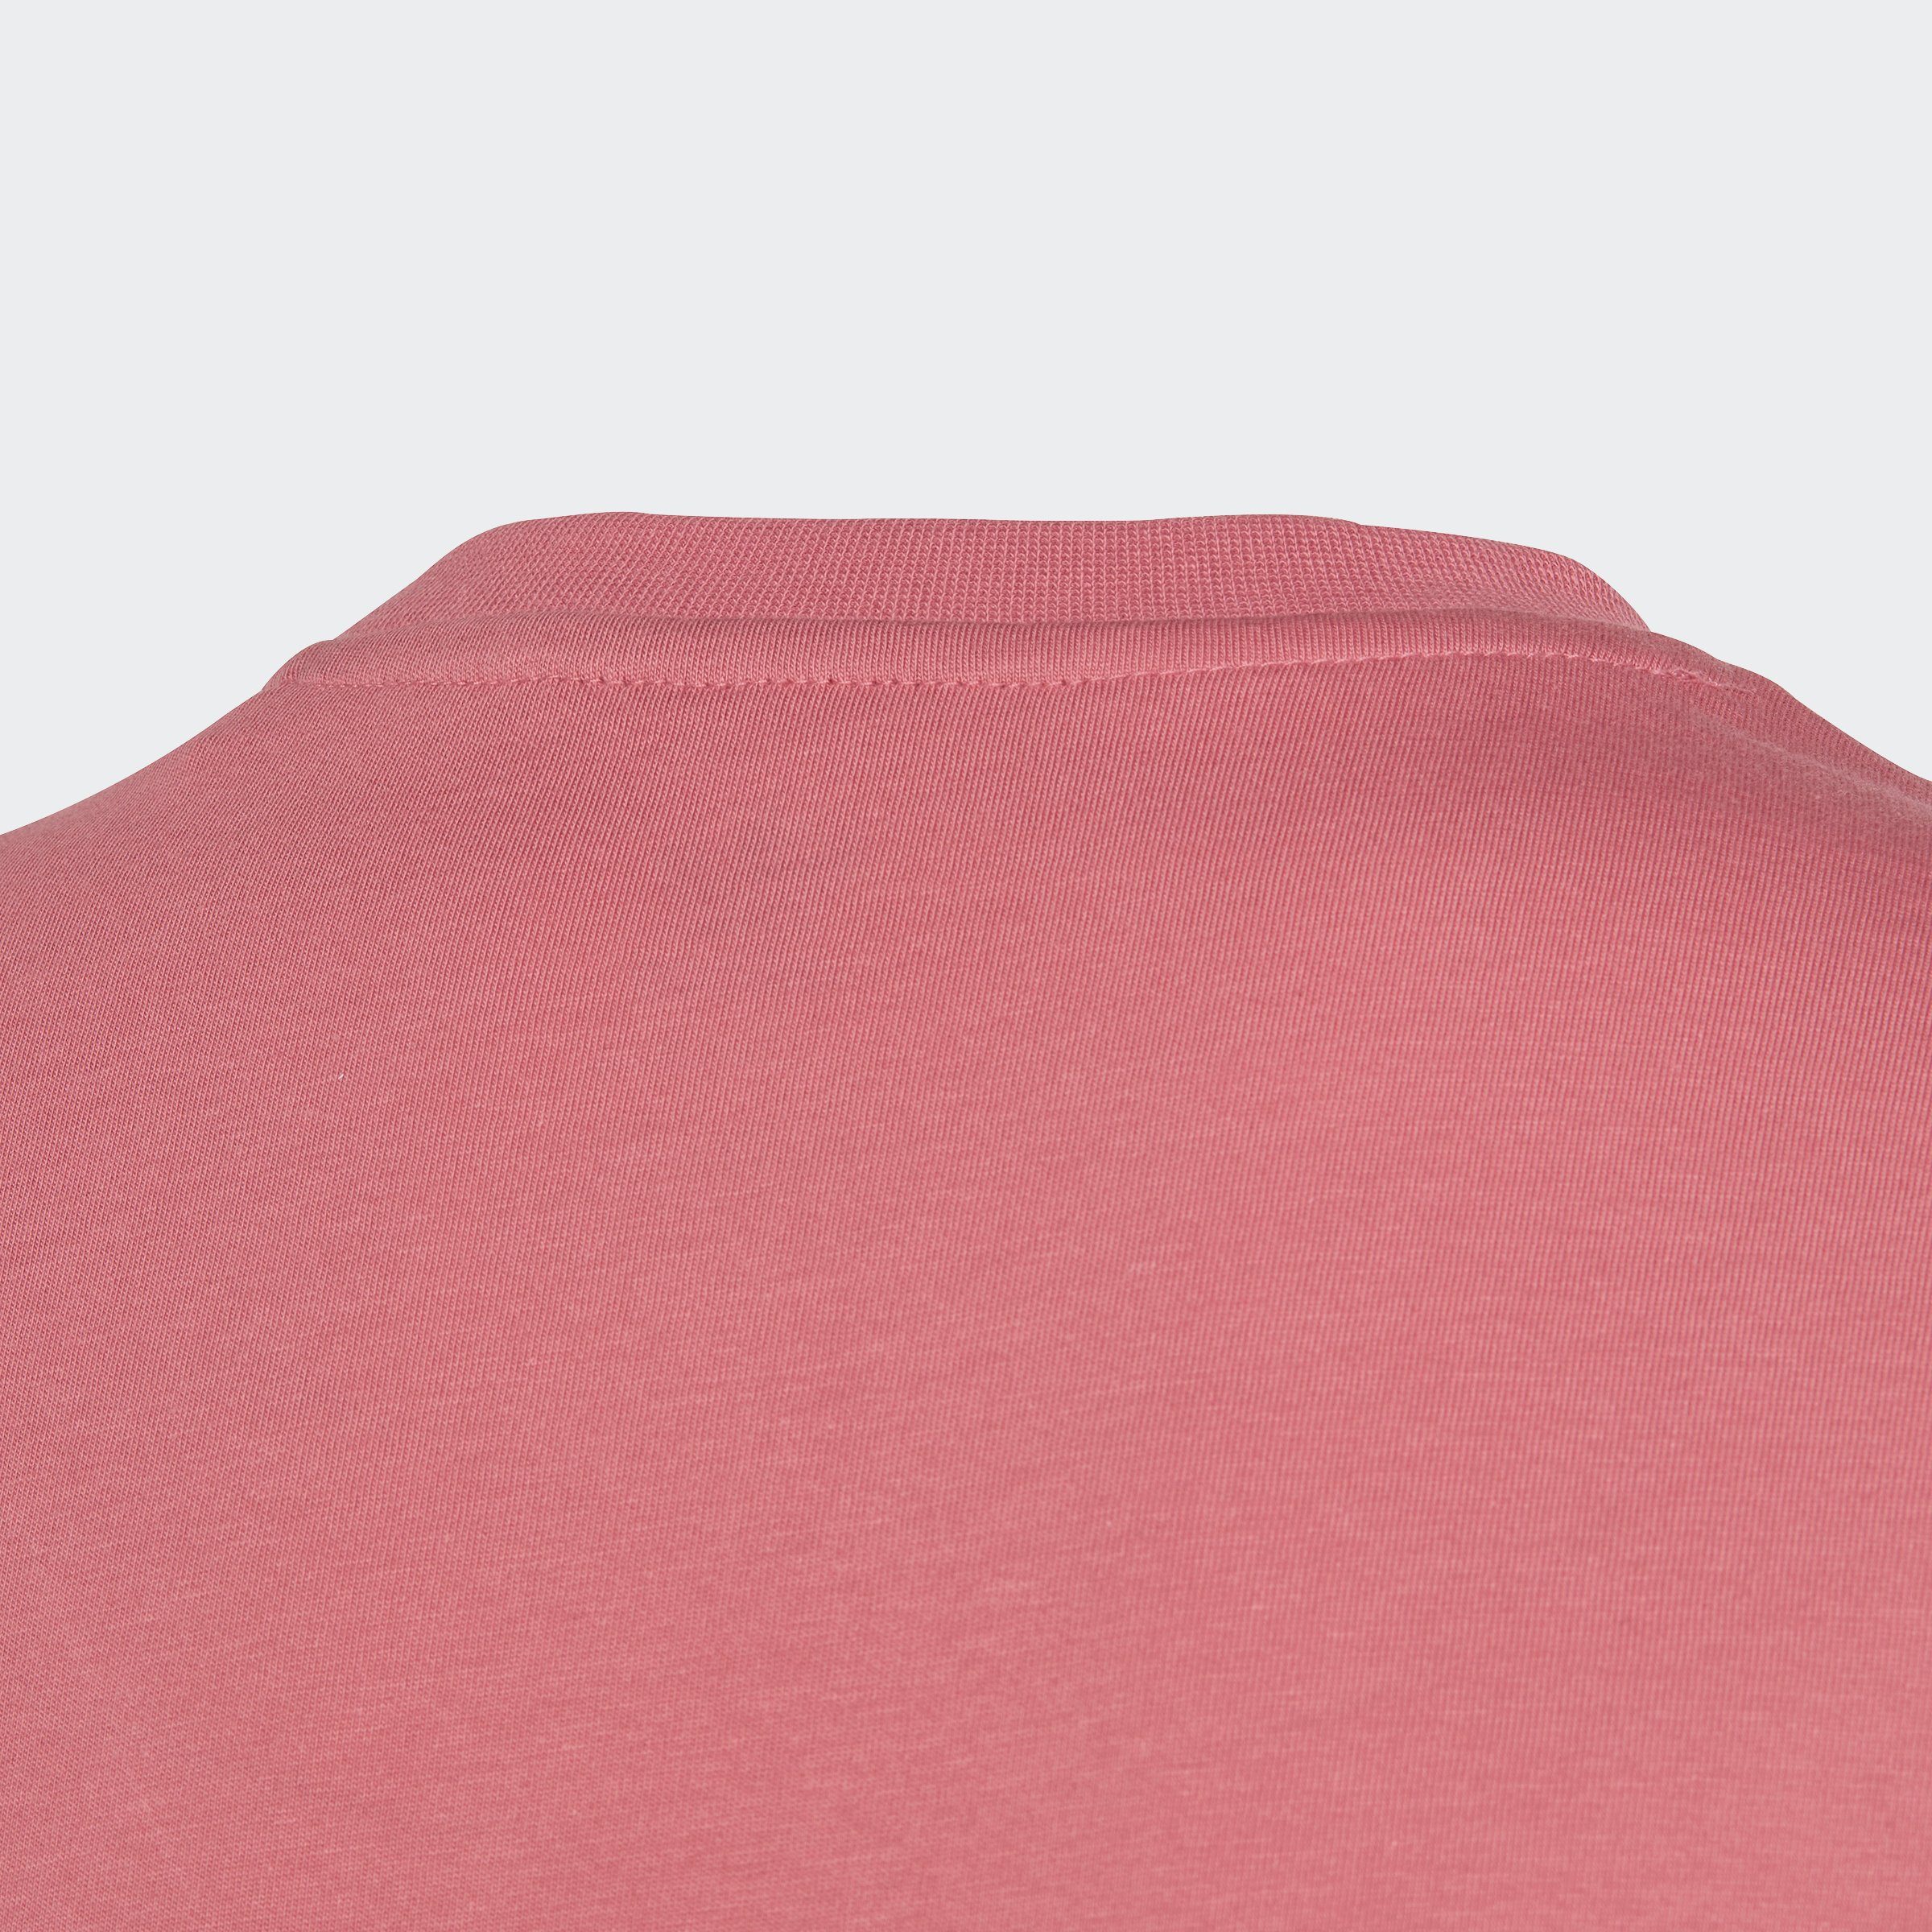 TEE adidas Pink T-Shirt Originals Strata